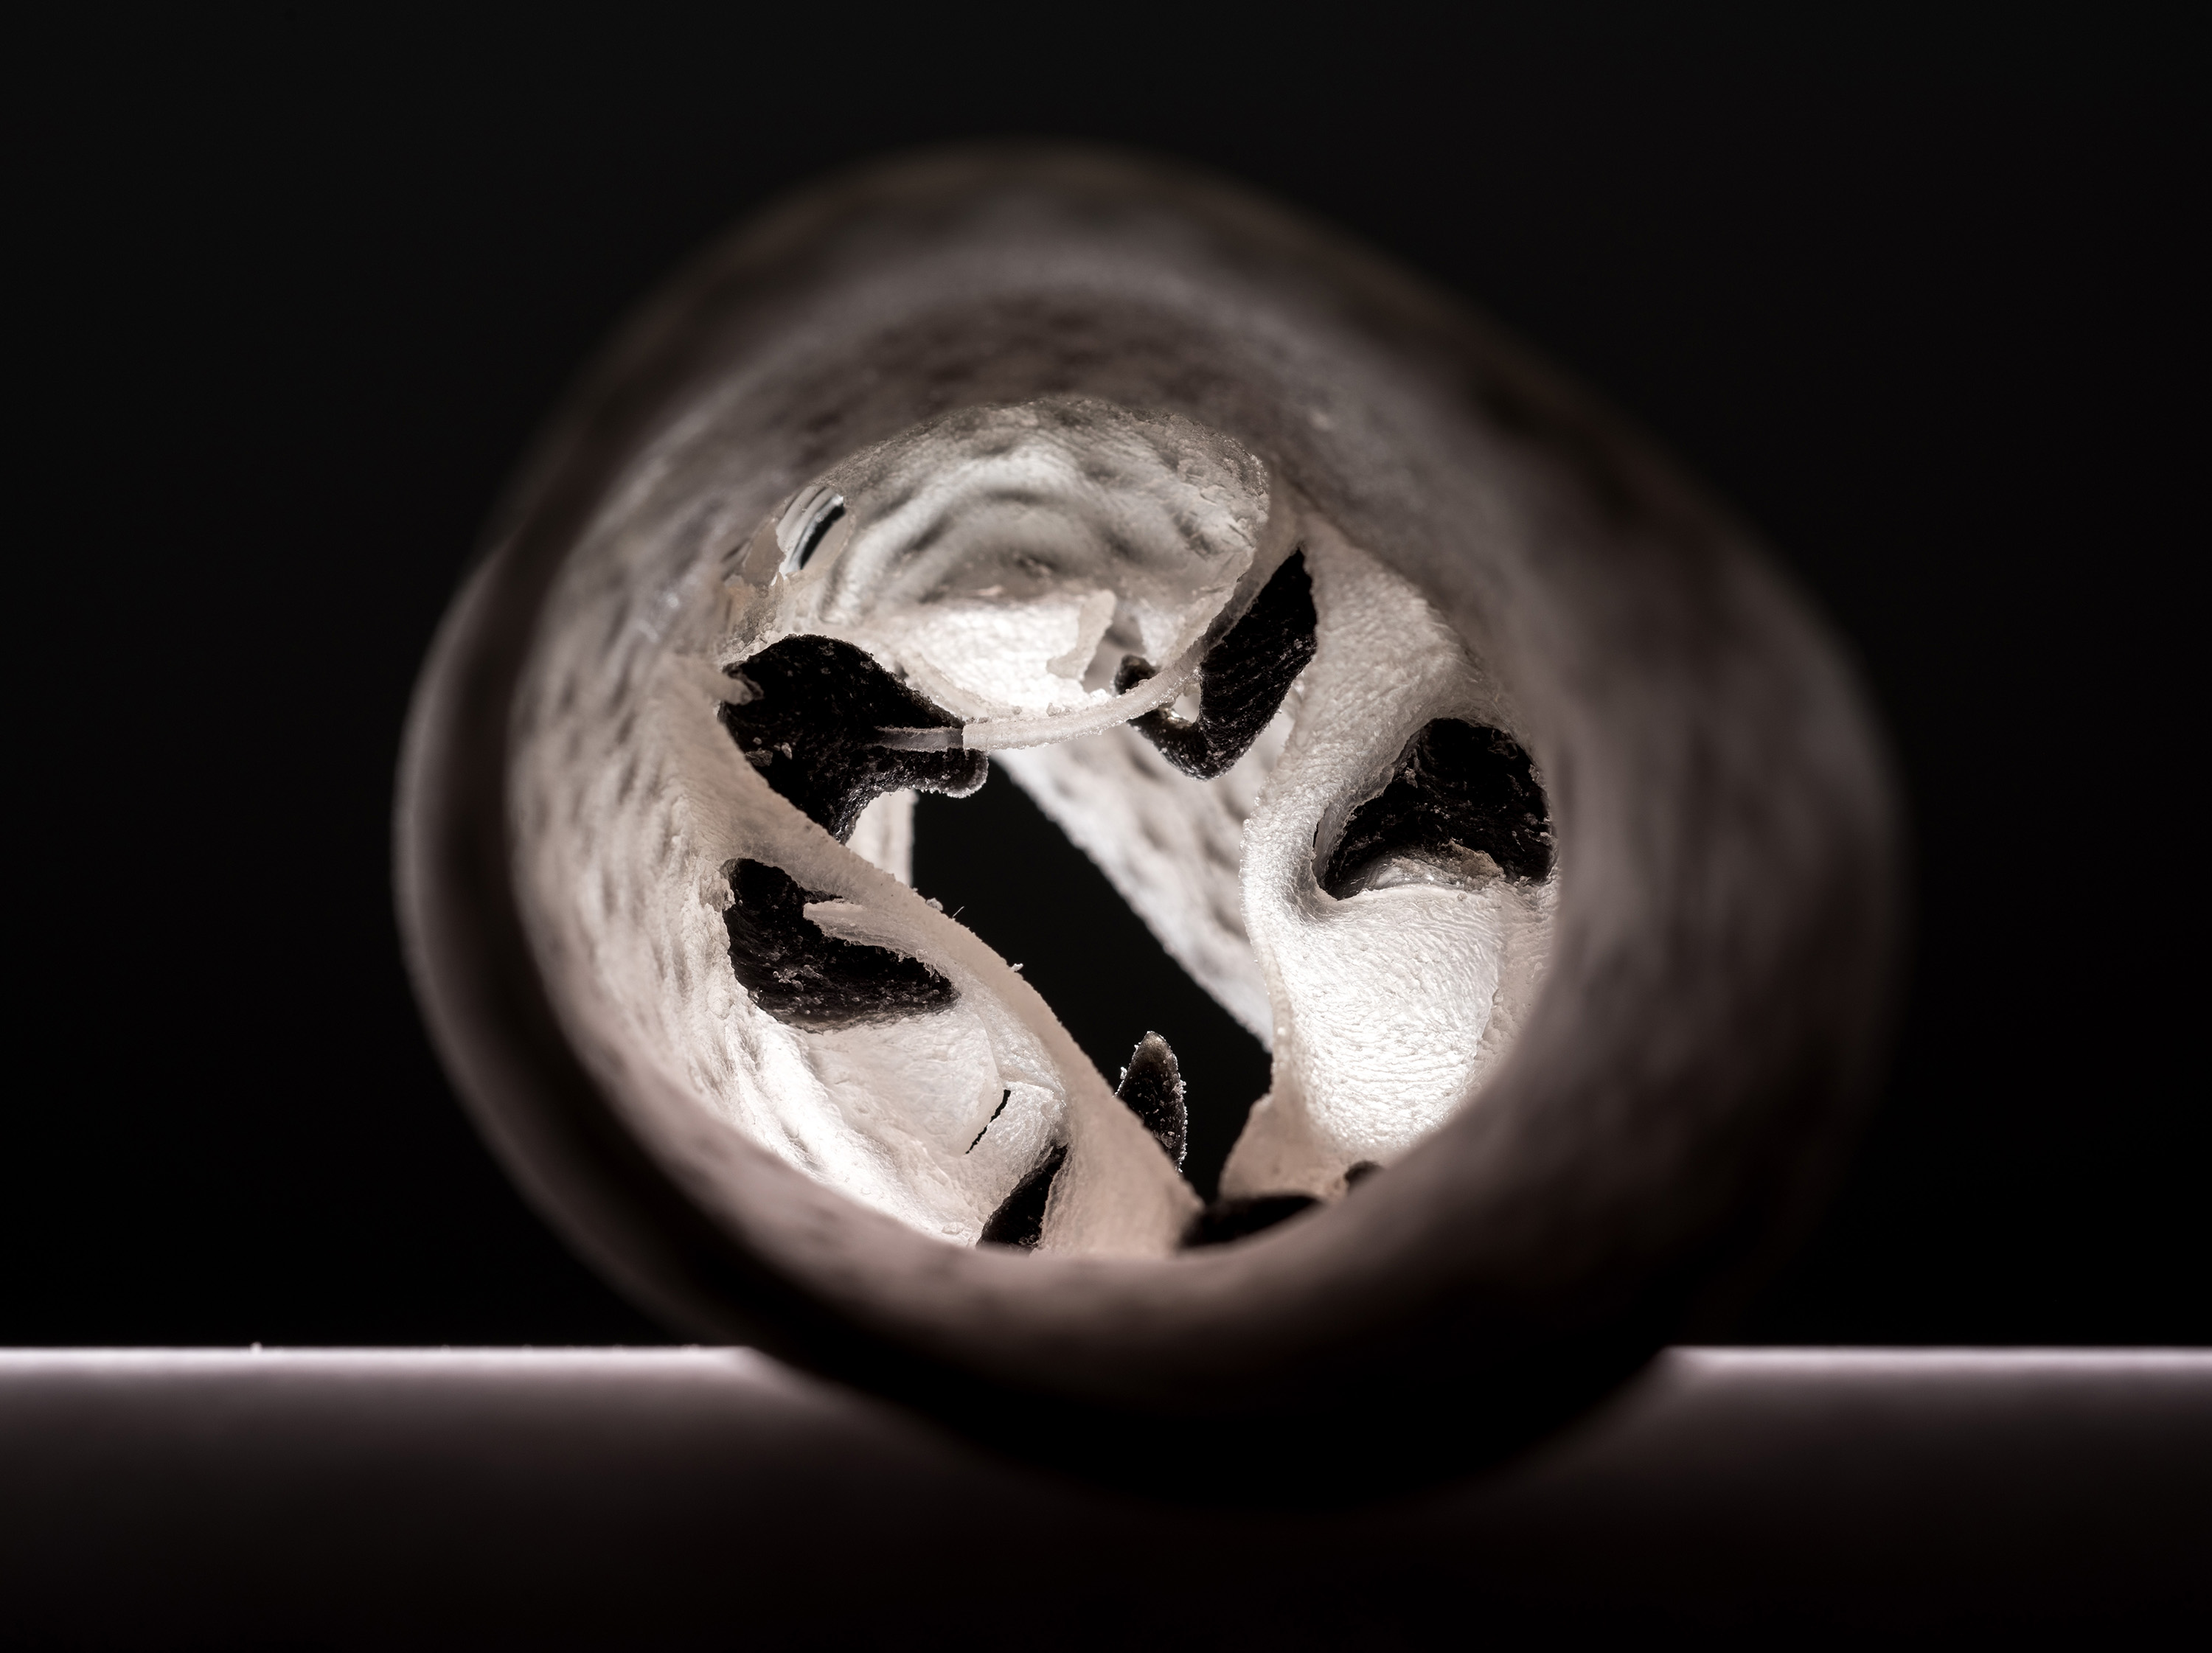 Inside the 3-D printed model of a human heart valve, black regions represent the location of actual calcium deposits. (Credit: Rob Felt, Georgia Tech)